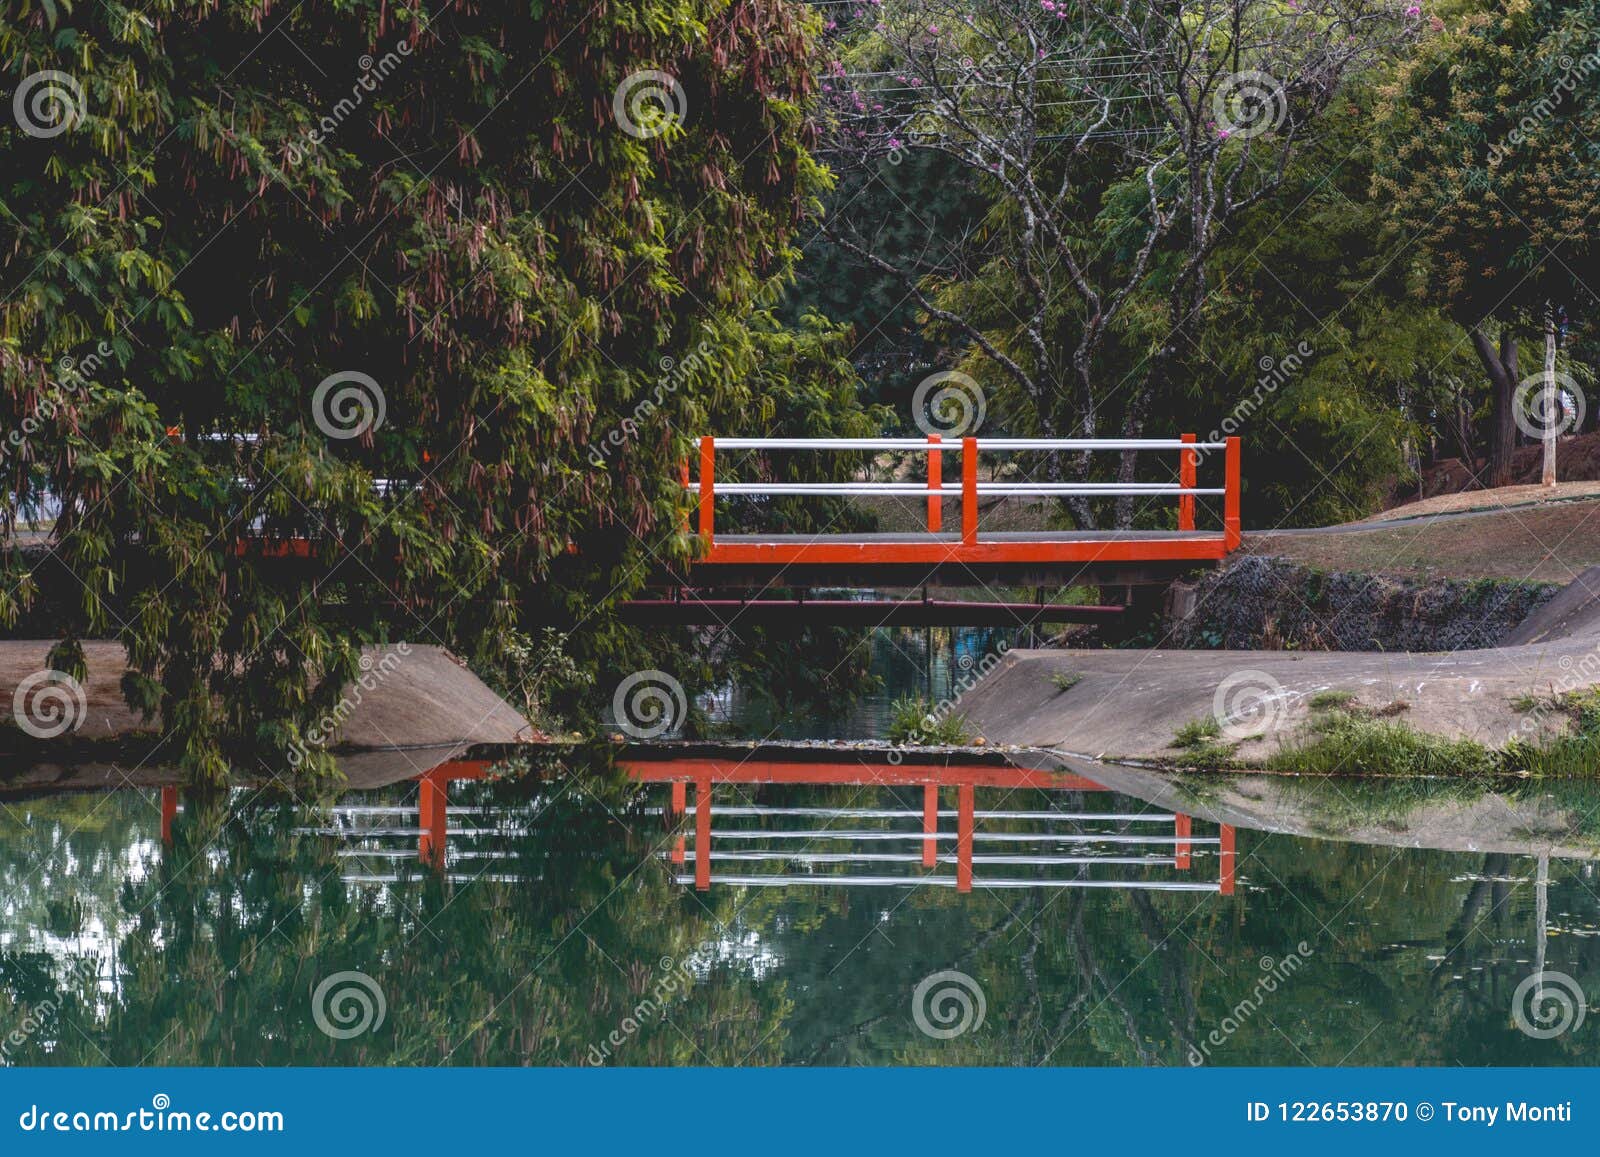 small orange bridge in the ecological park, in indaiatuba, brazil